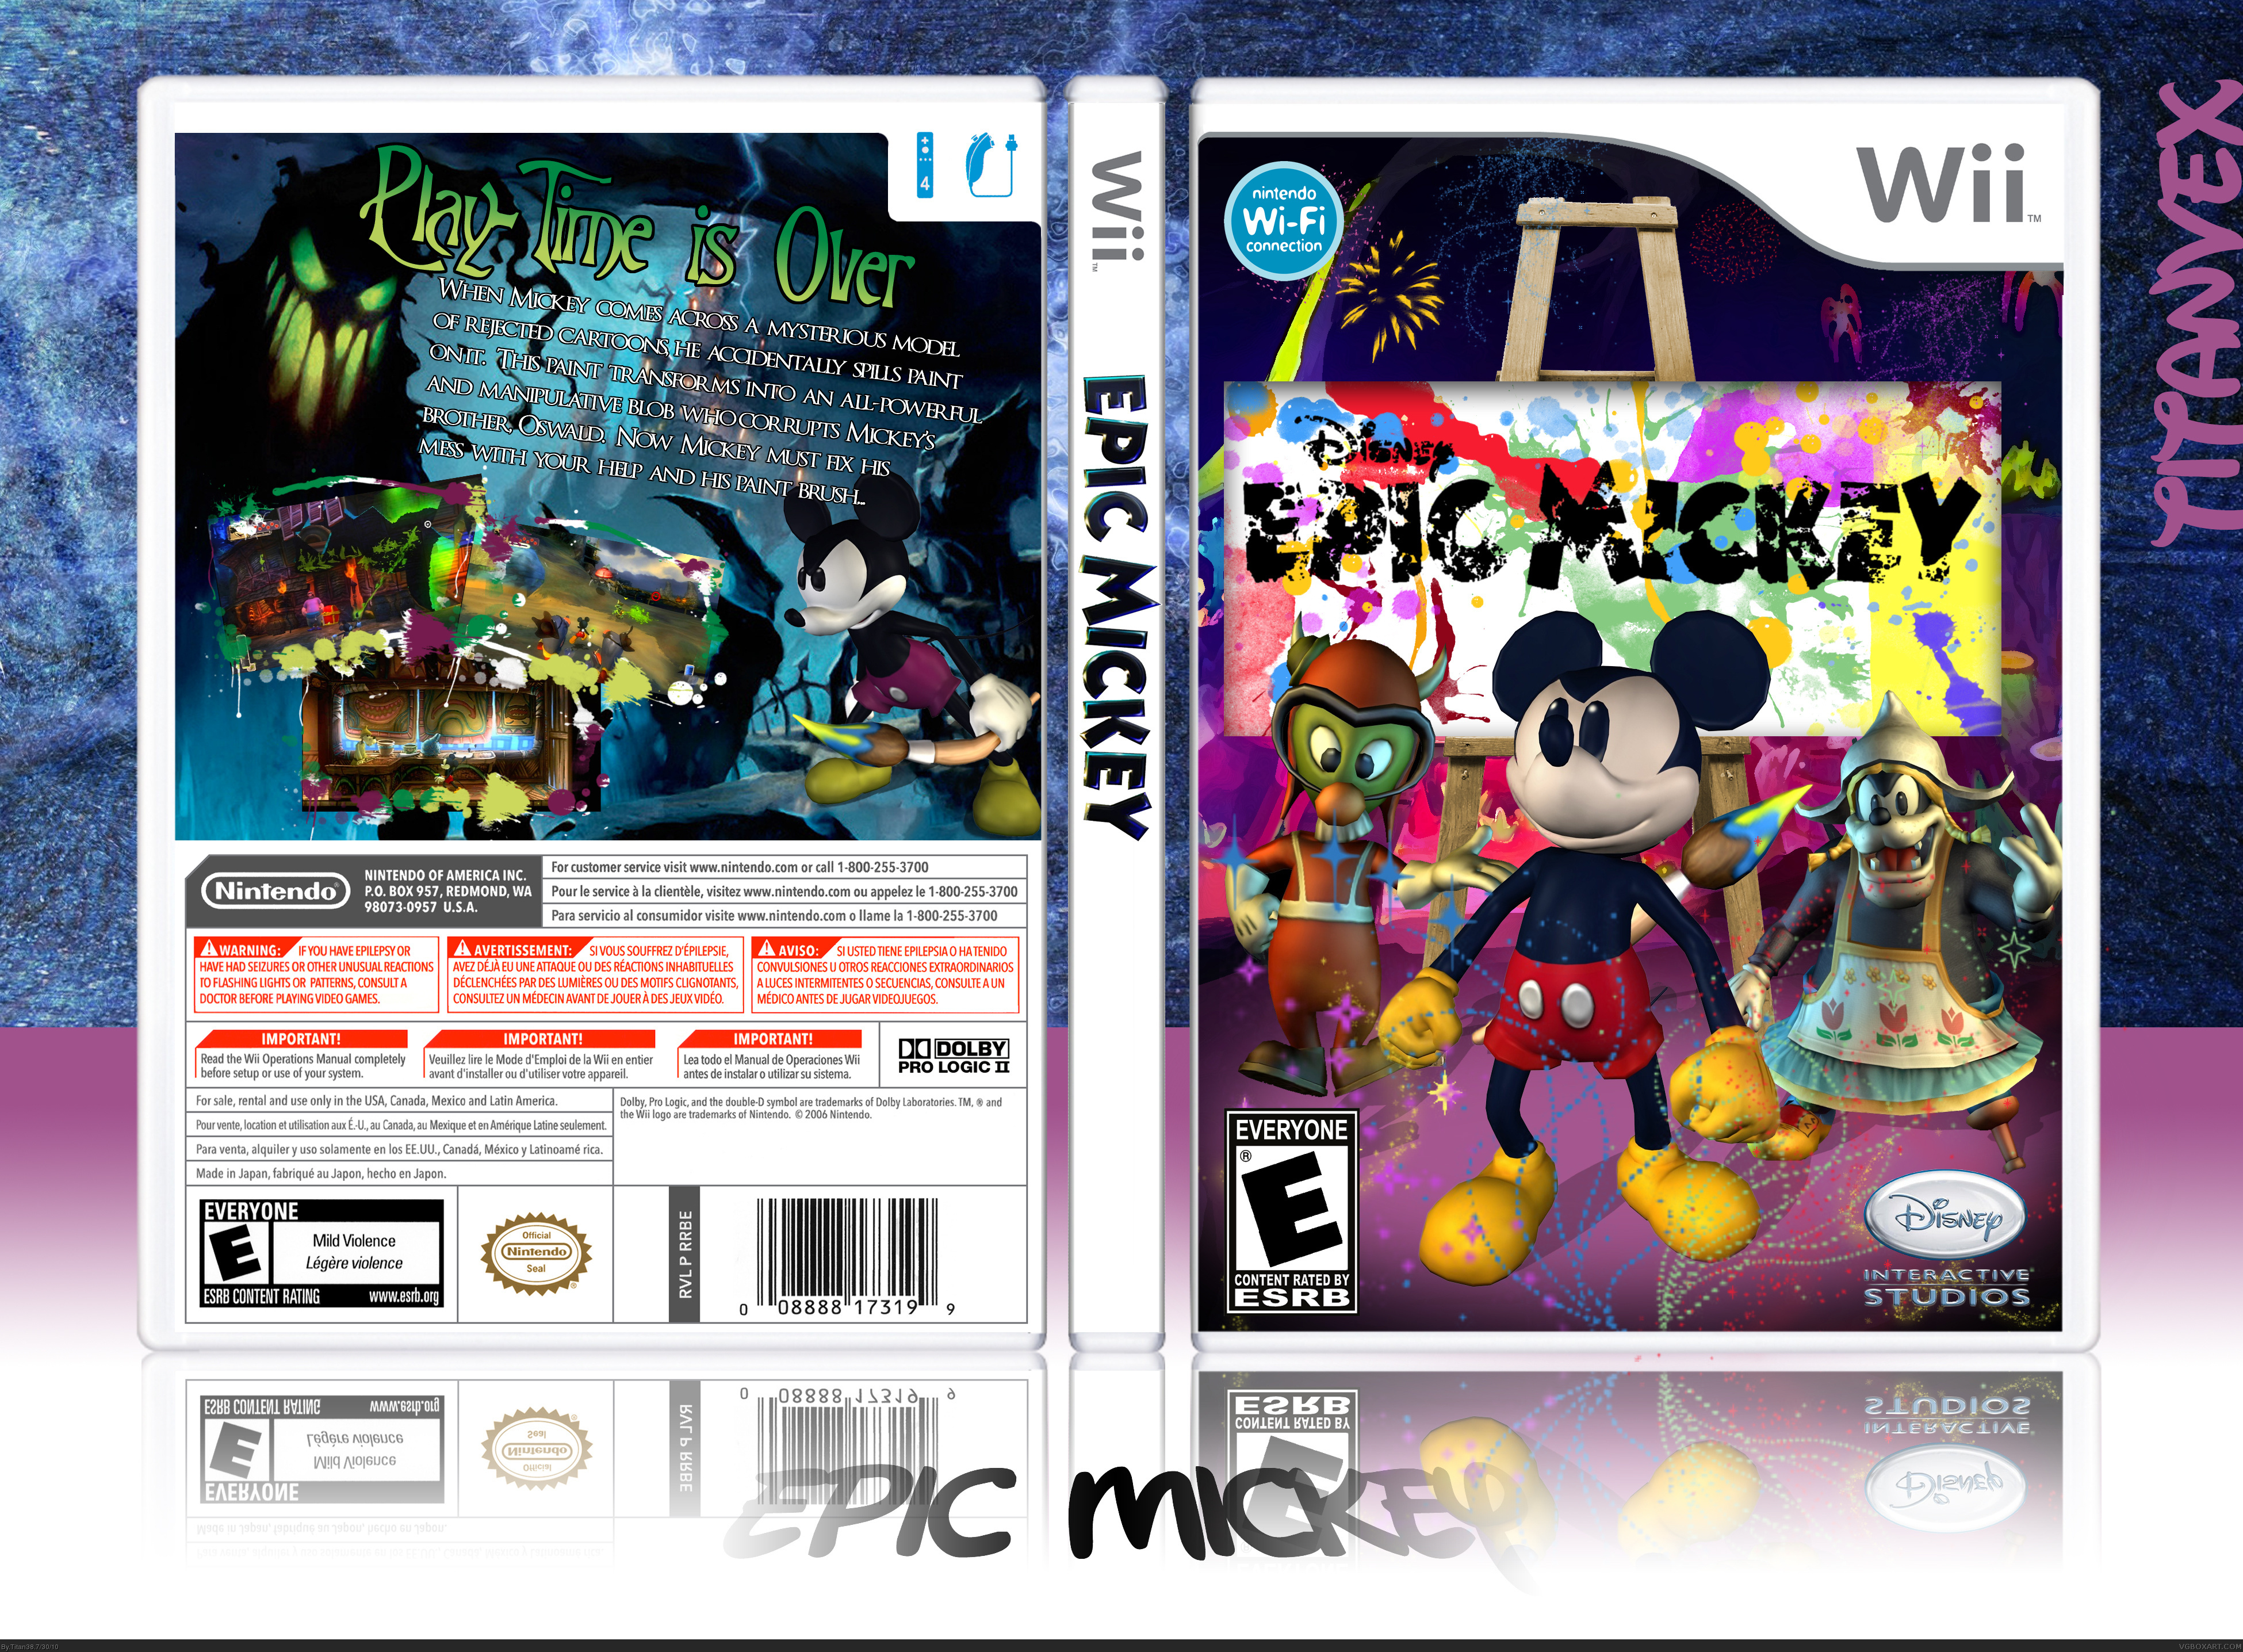 Epic Mickey box cover